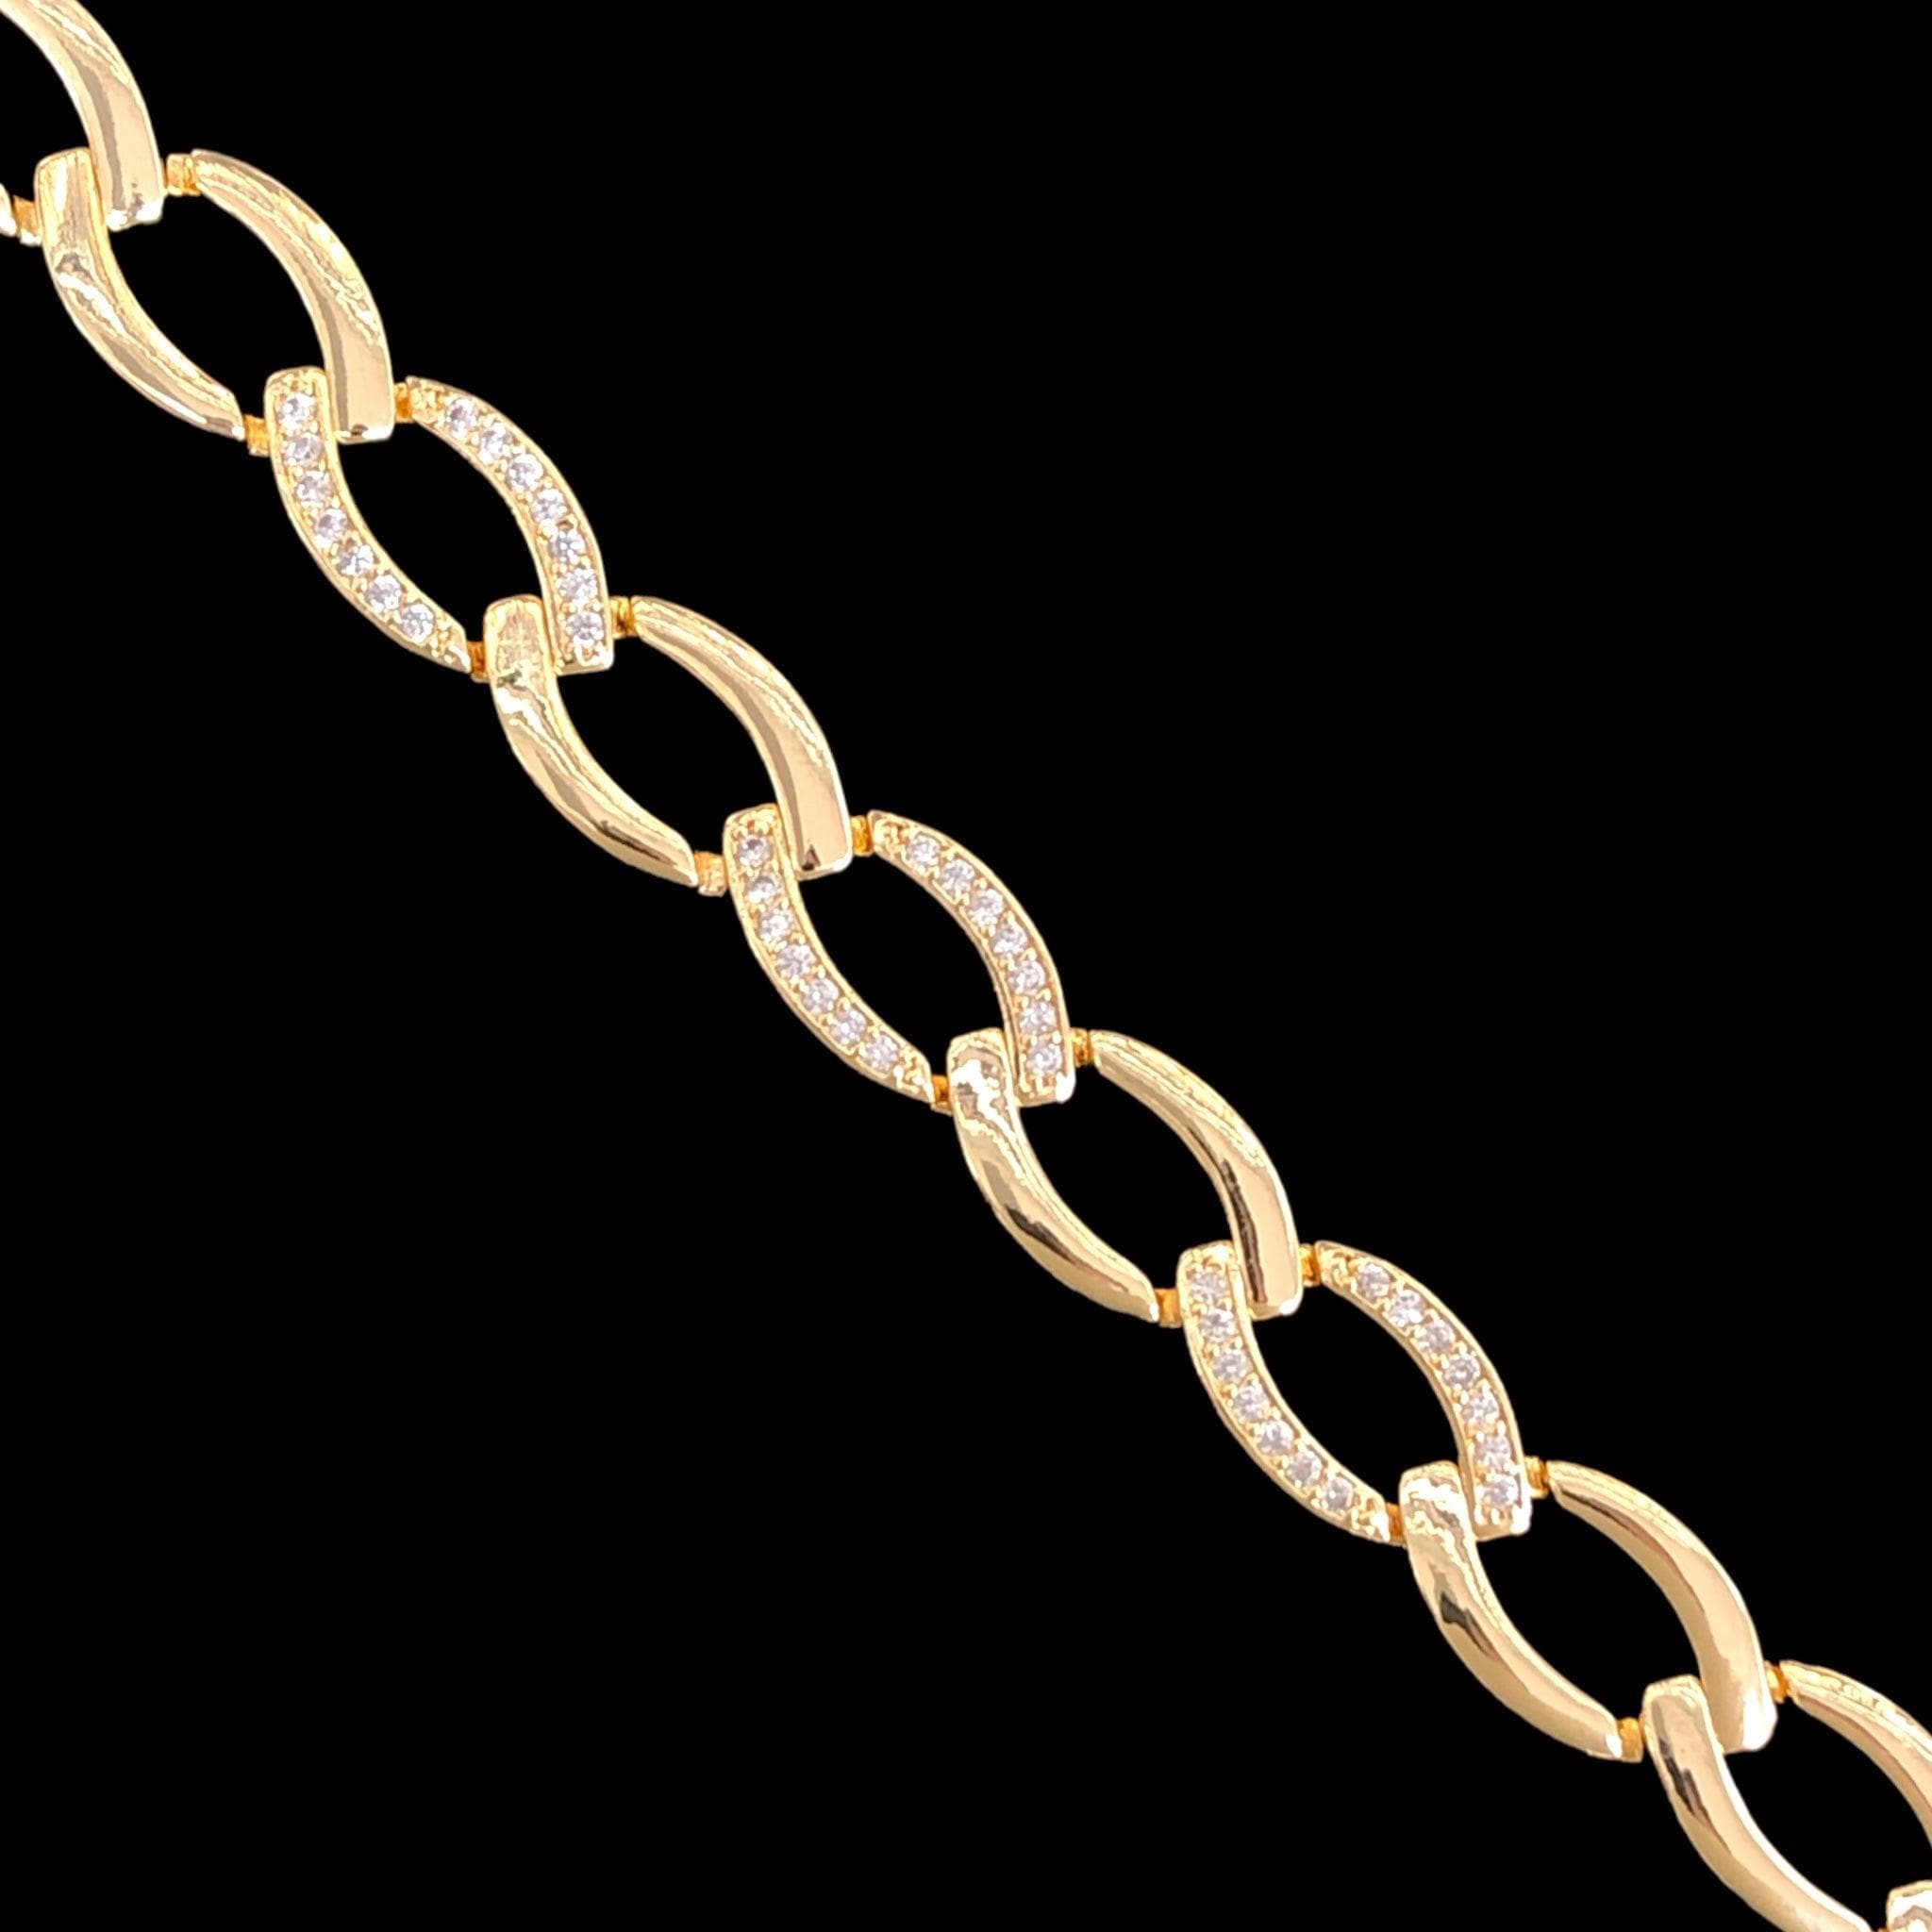 18K Gold Filled Chic Siena CZ Bracelet - kuania oro laminado